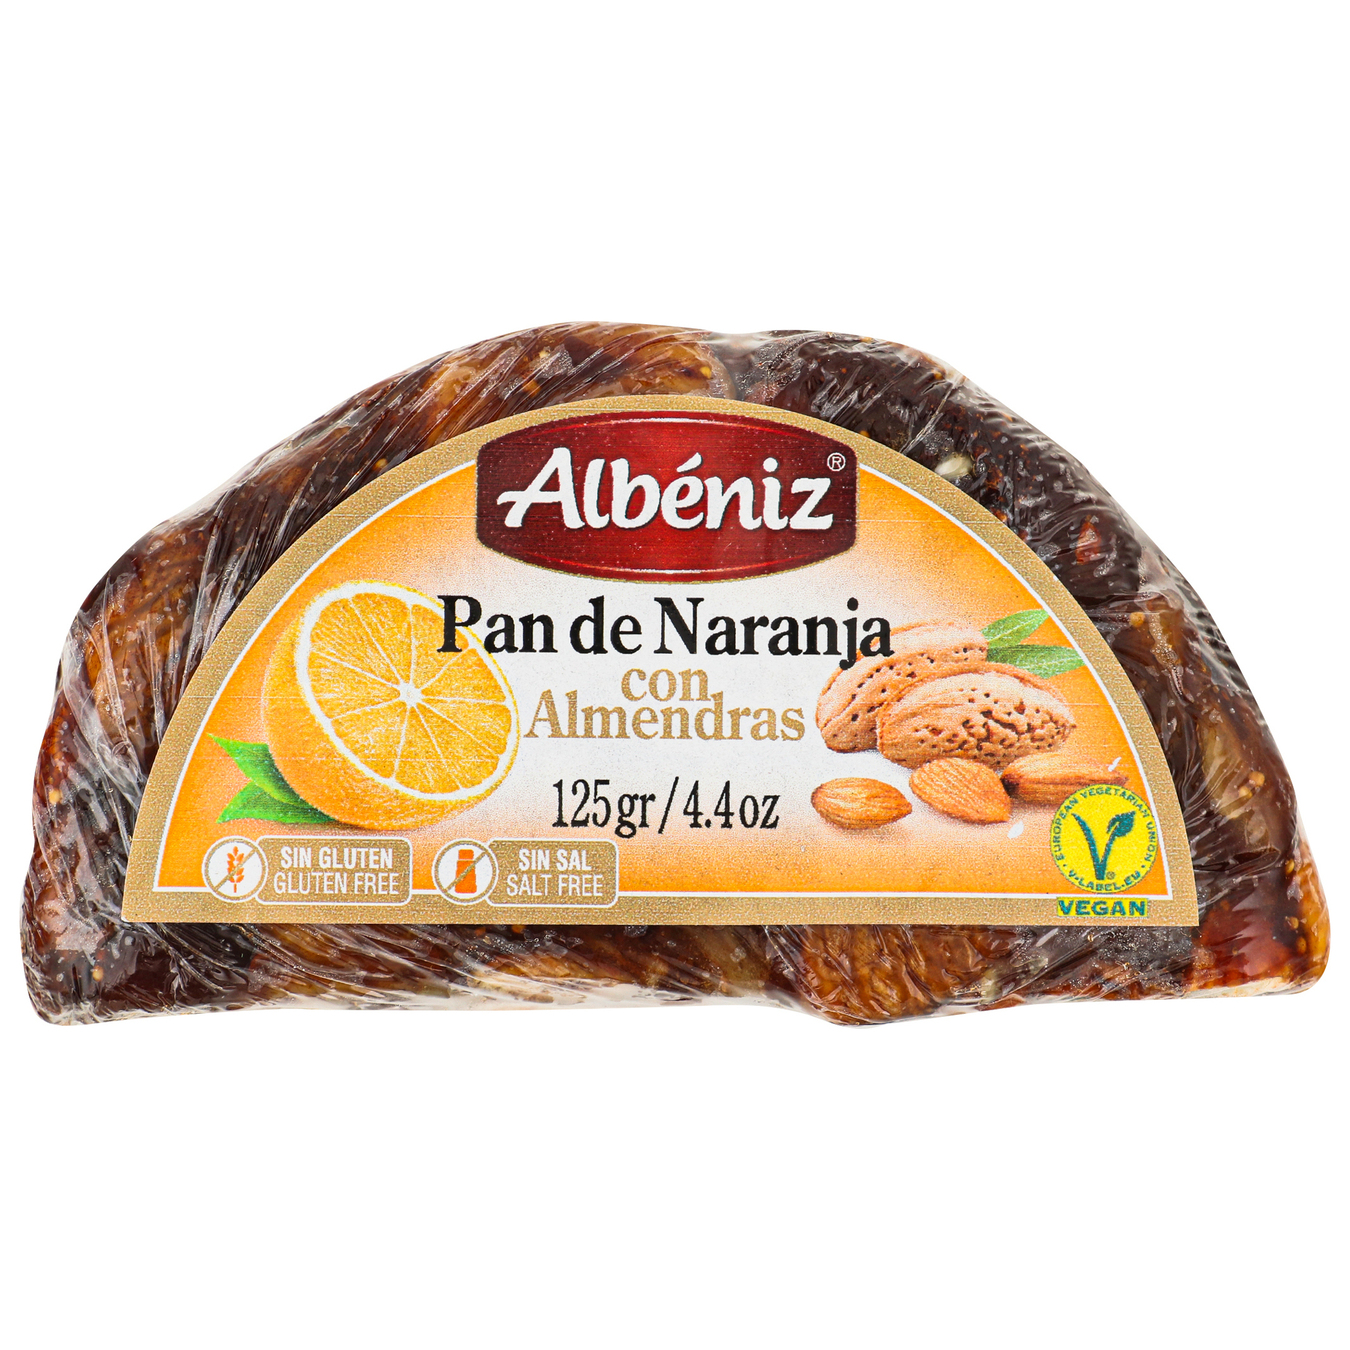 Albeniz Orange-Almond Spanish Bread 125g